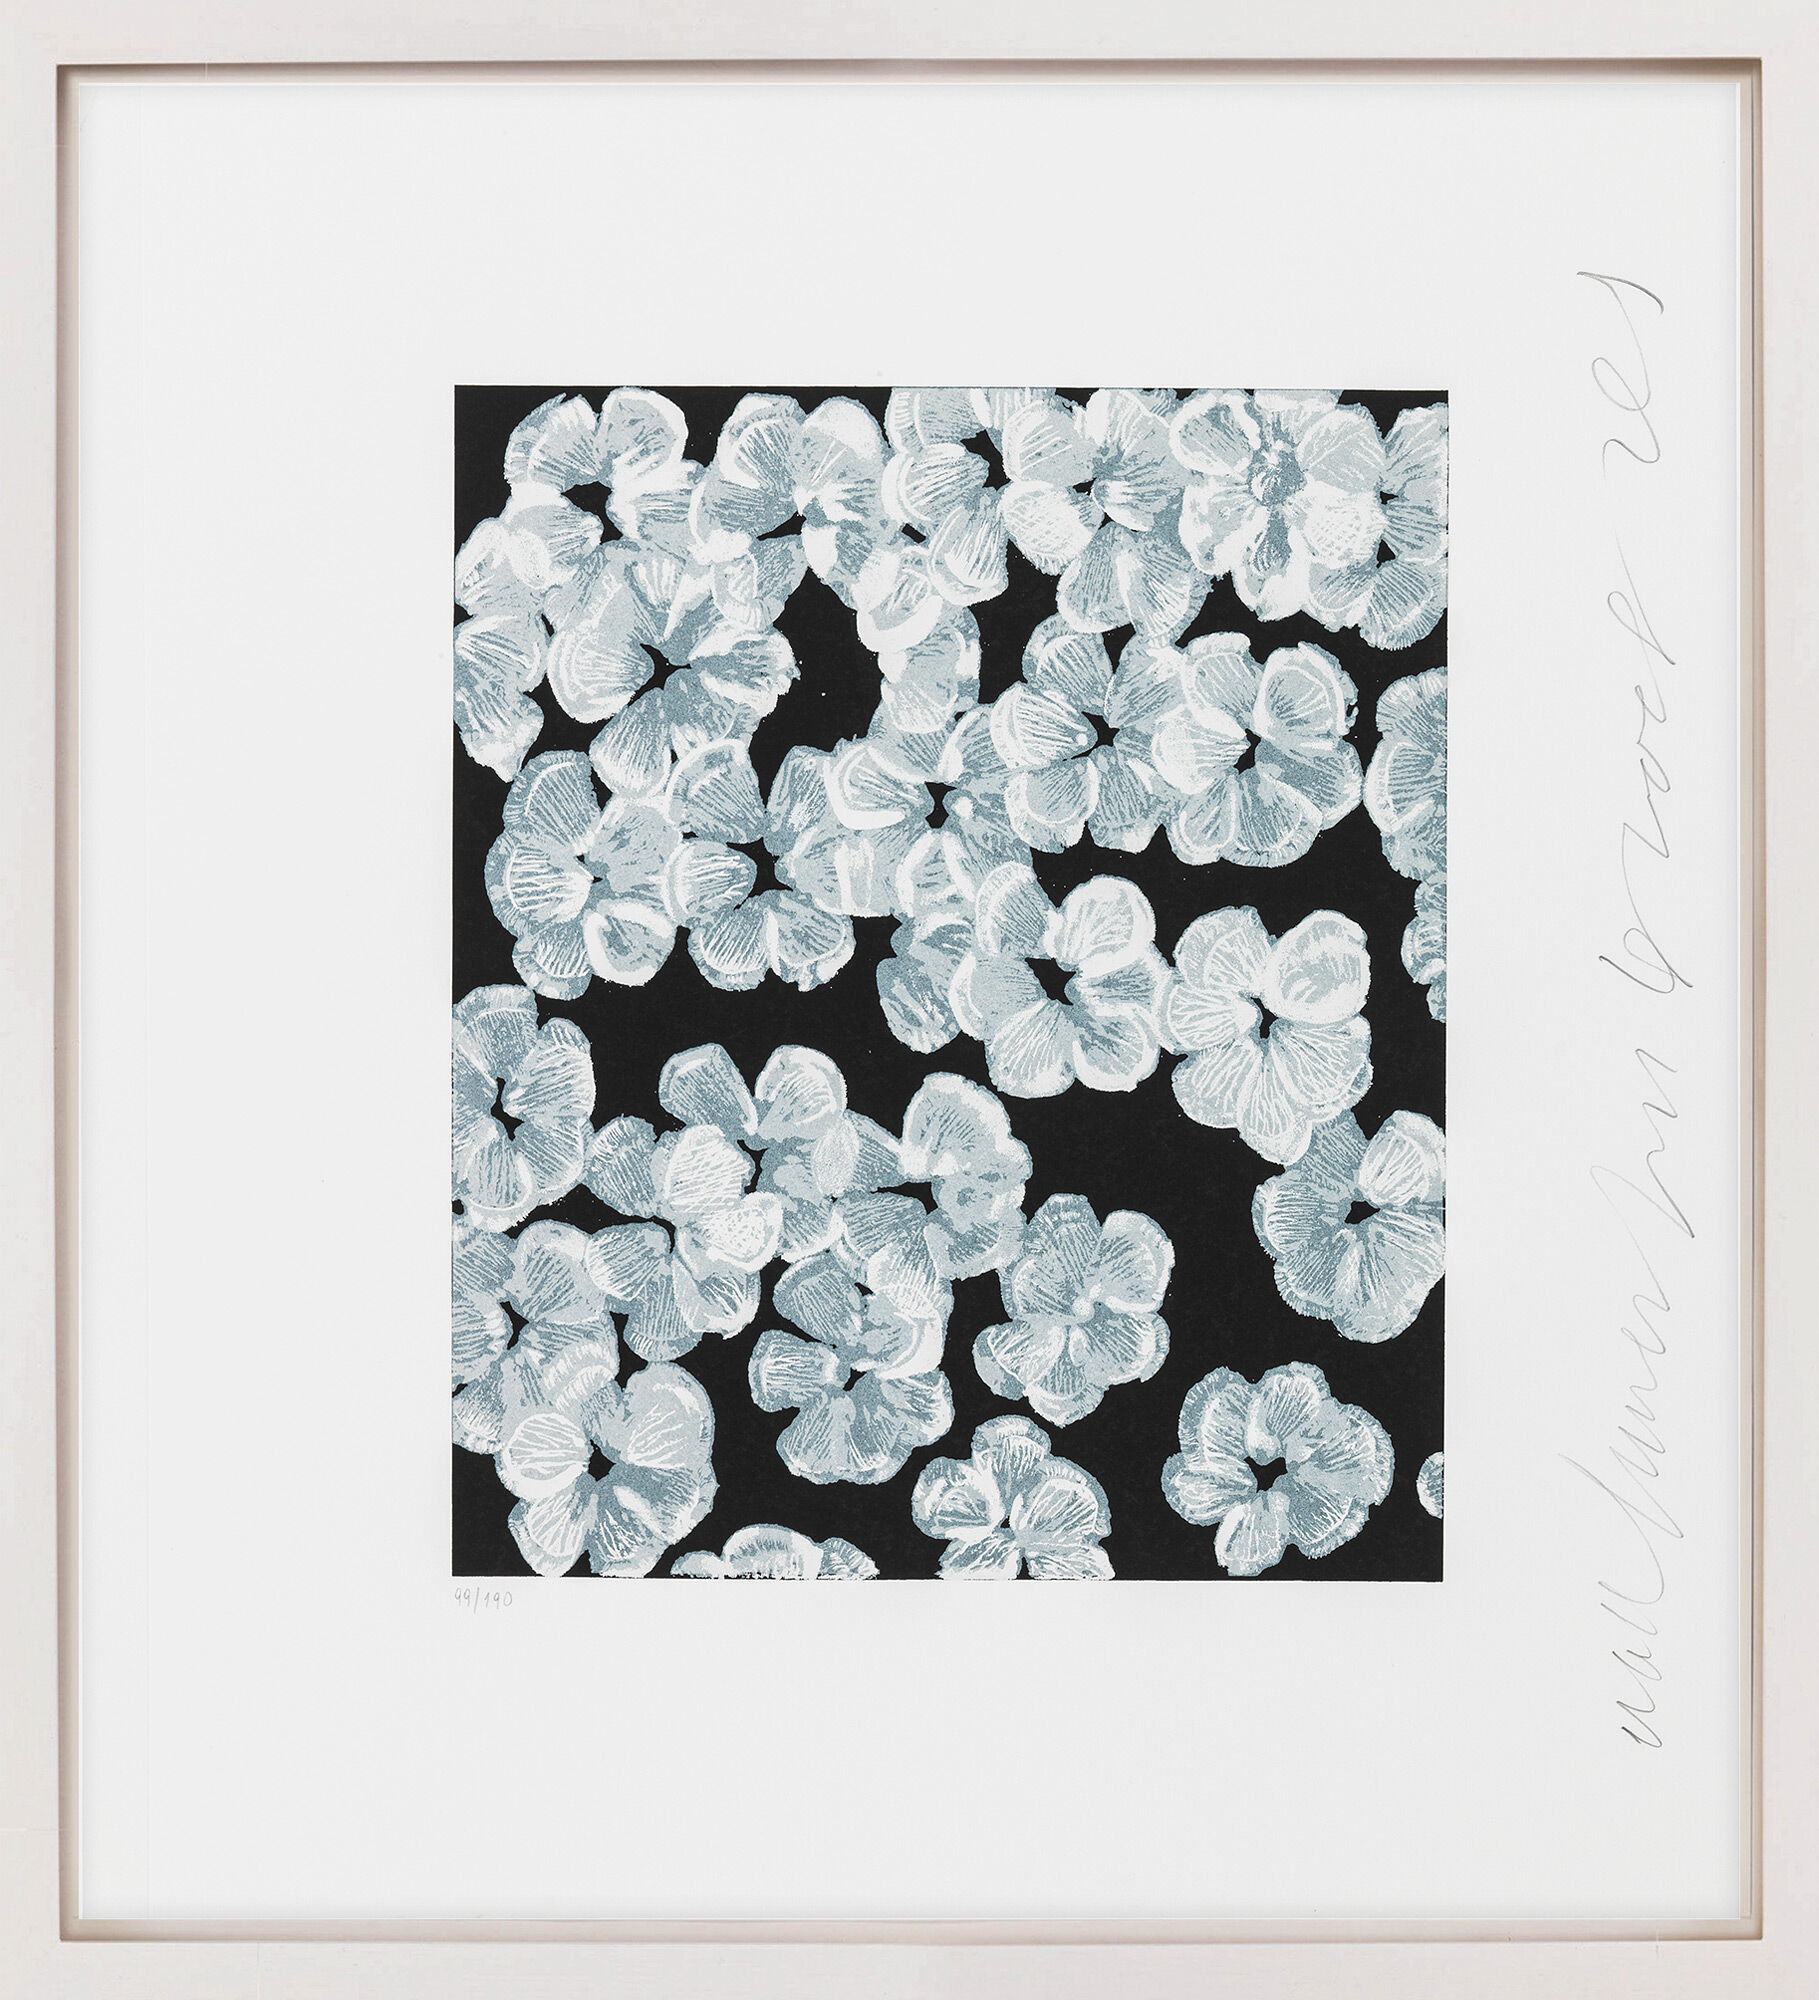 Tableau "Wall flowers 8" (2008) von Donald Sultan